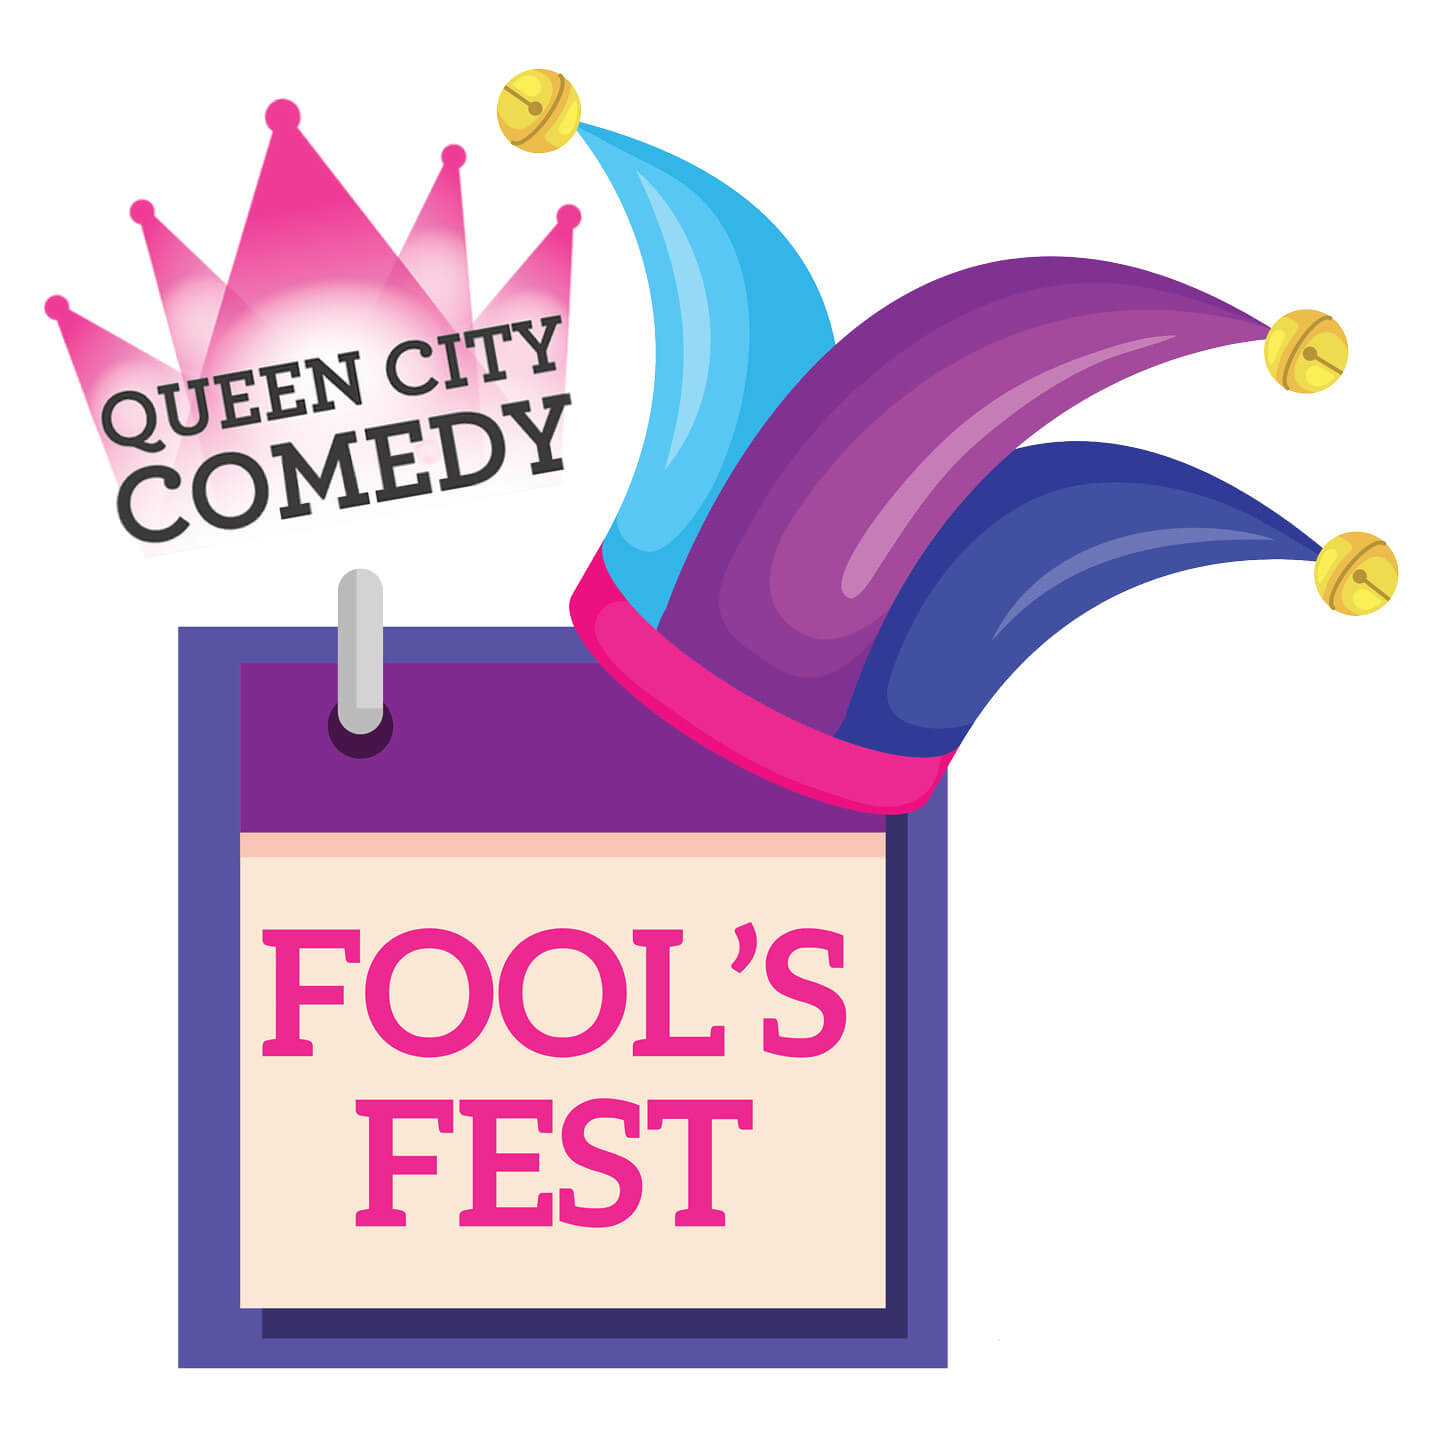 Queen City Comedy Fool's Fest